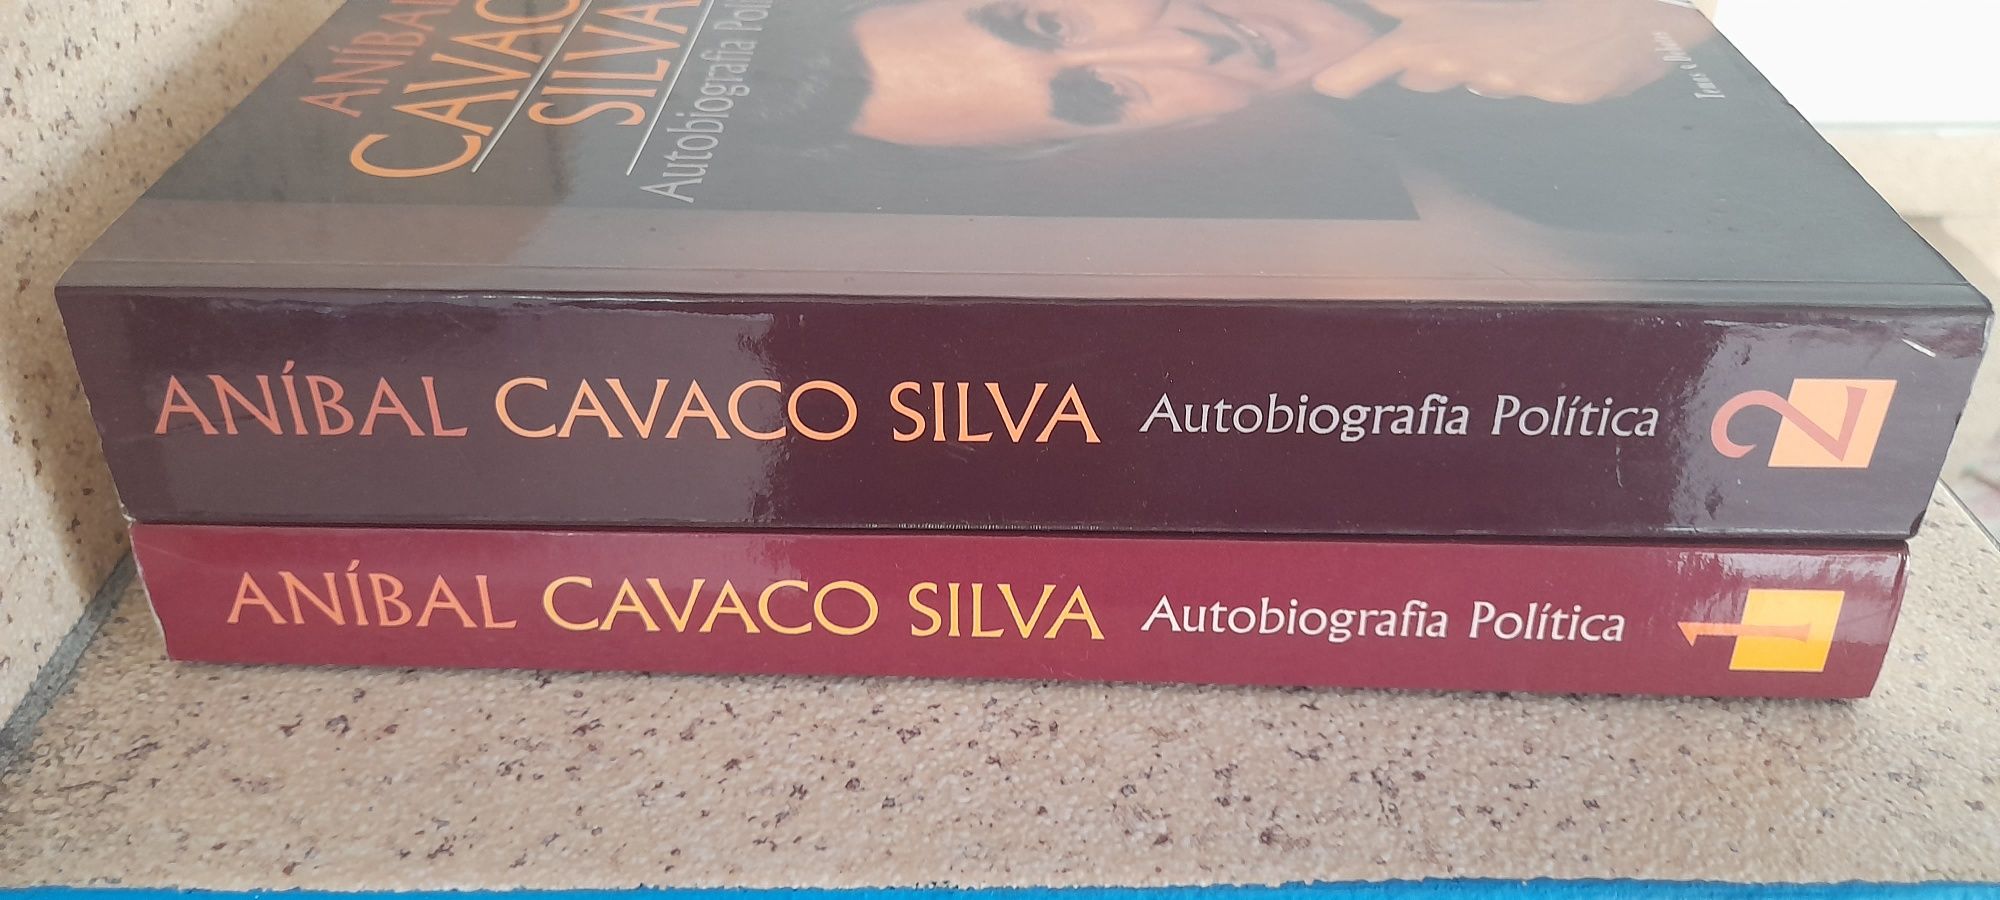 Cavaco Silva 2 volumes